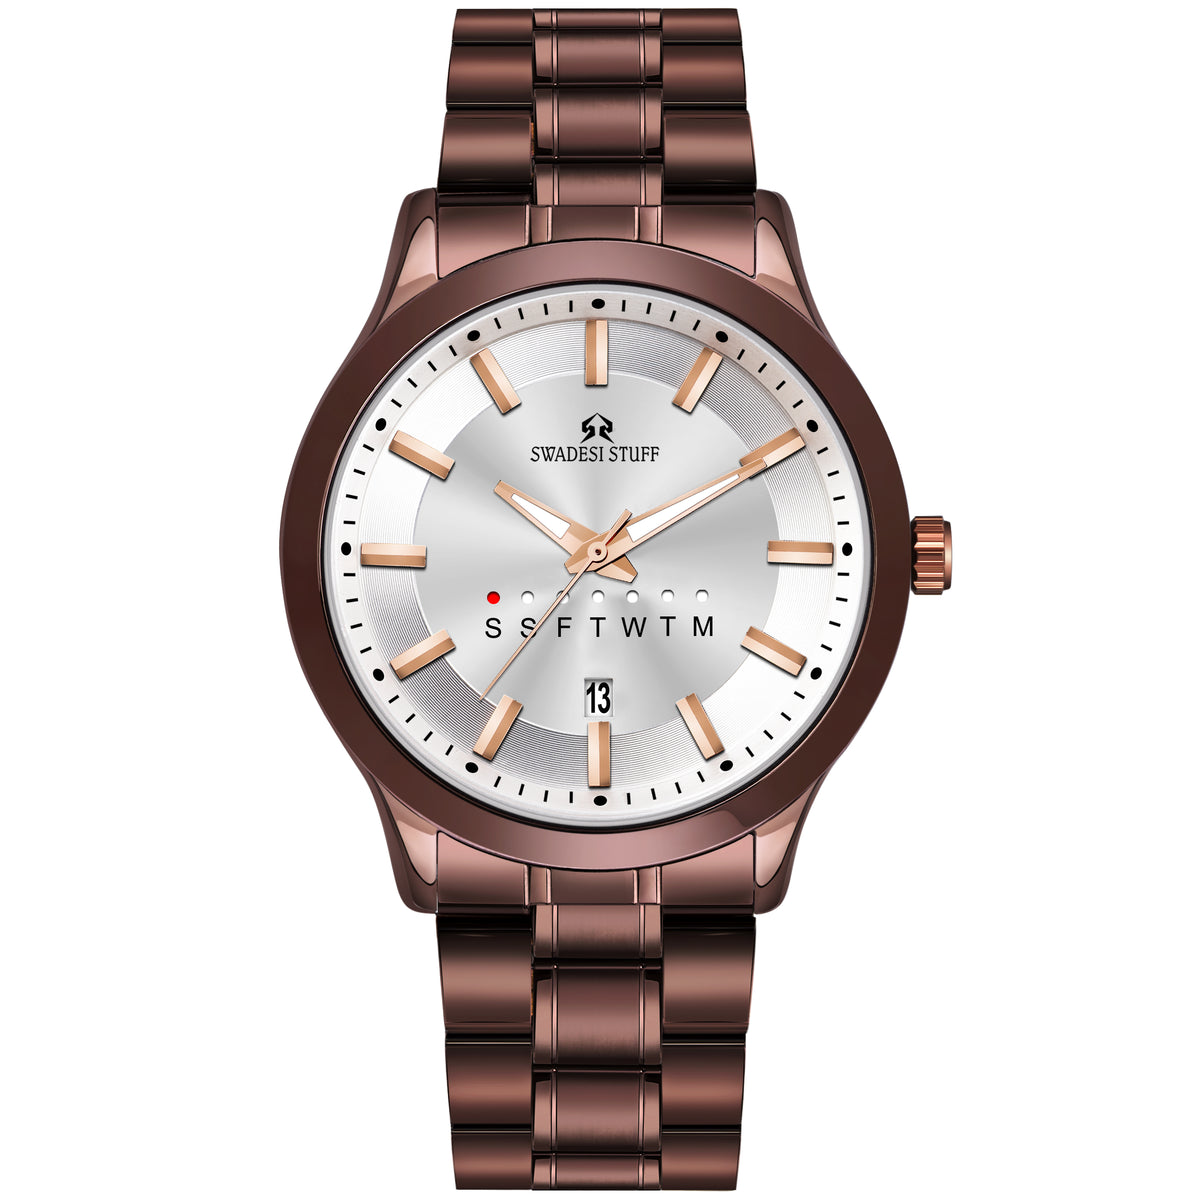 Resolute - Brown - Premium & Luxurious Watch For Men